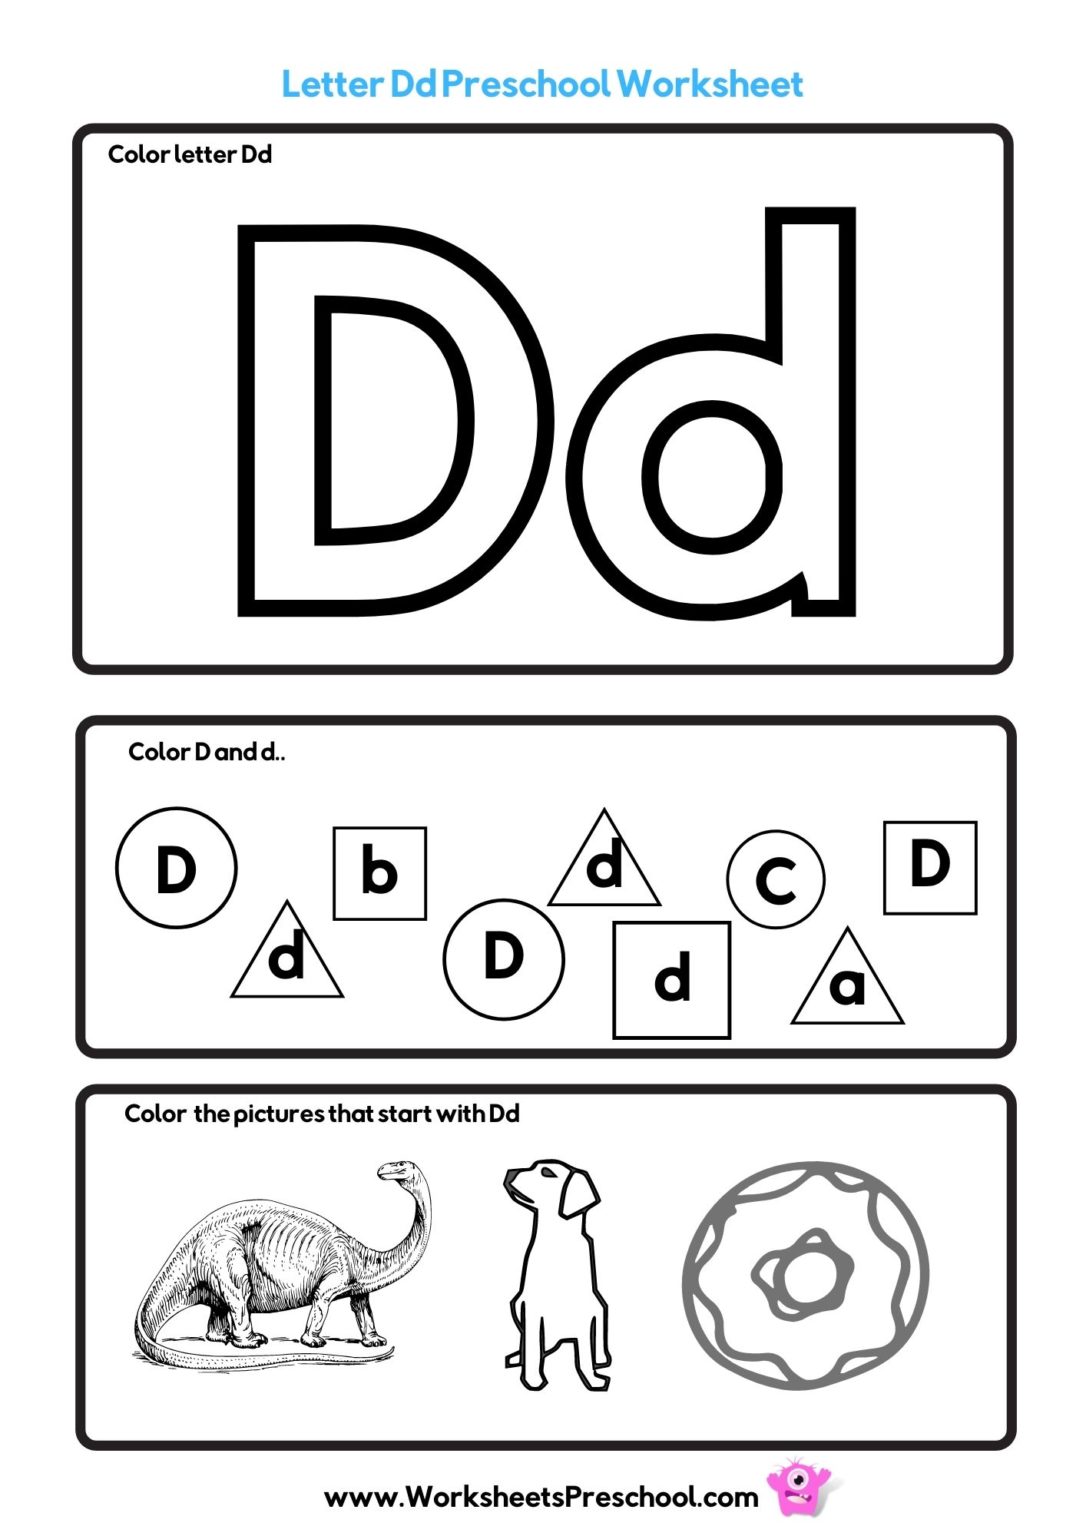 Letter D Worksheets For Preschool 4 Free Printable PDFs